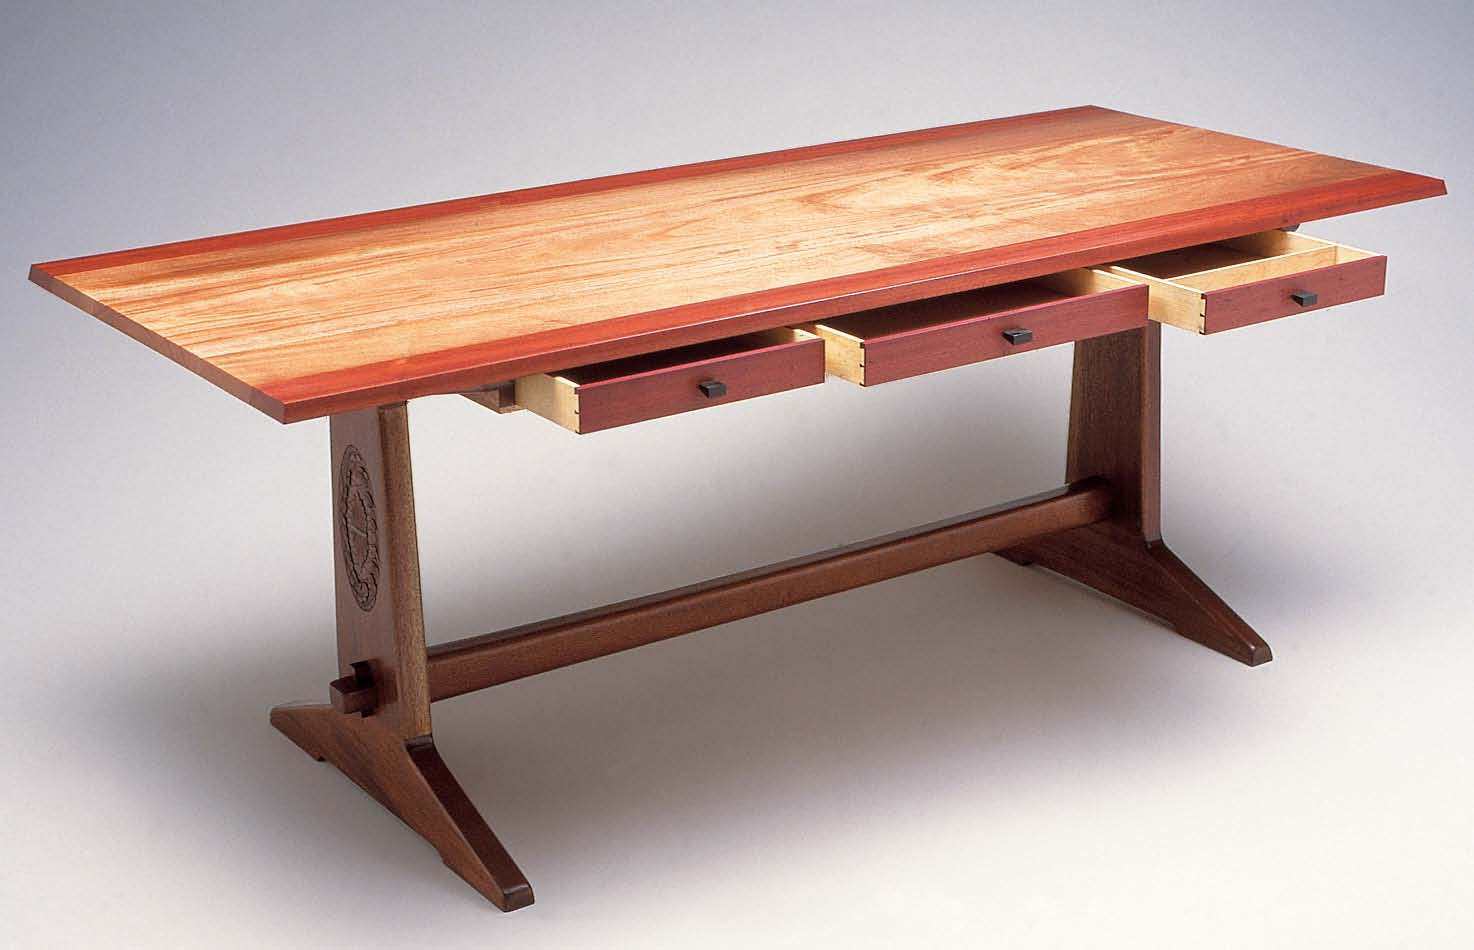 wood table designs plans photo - 10